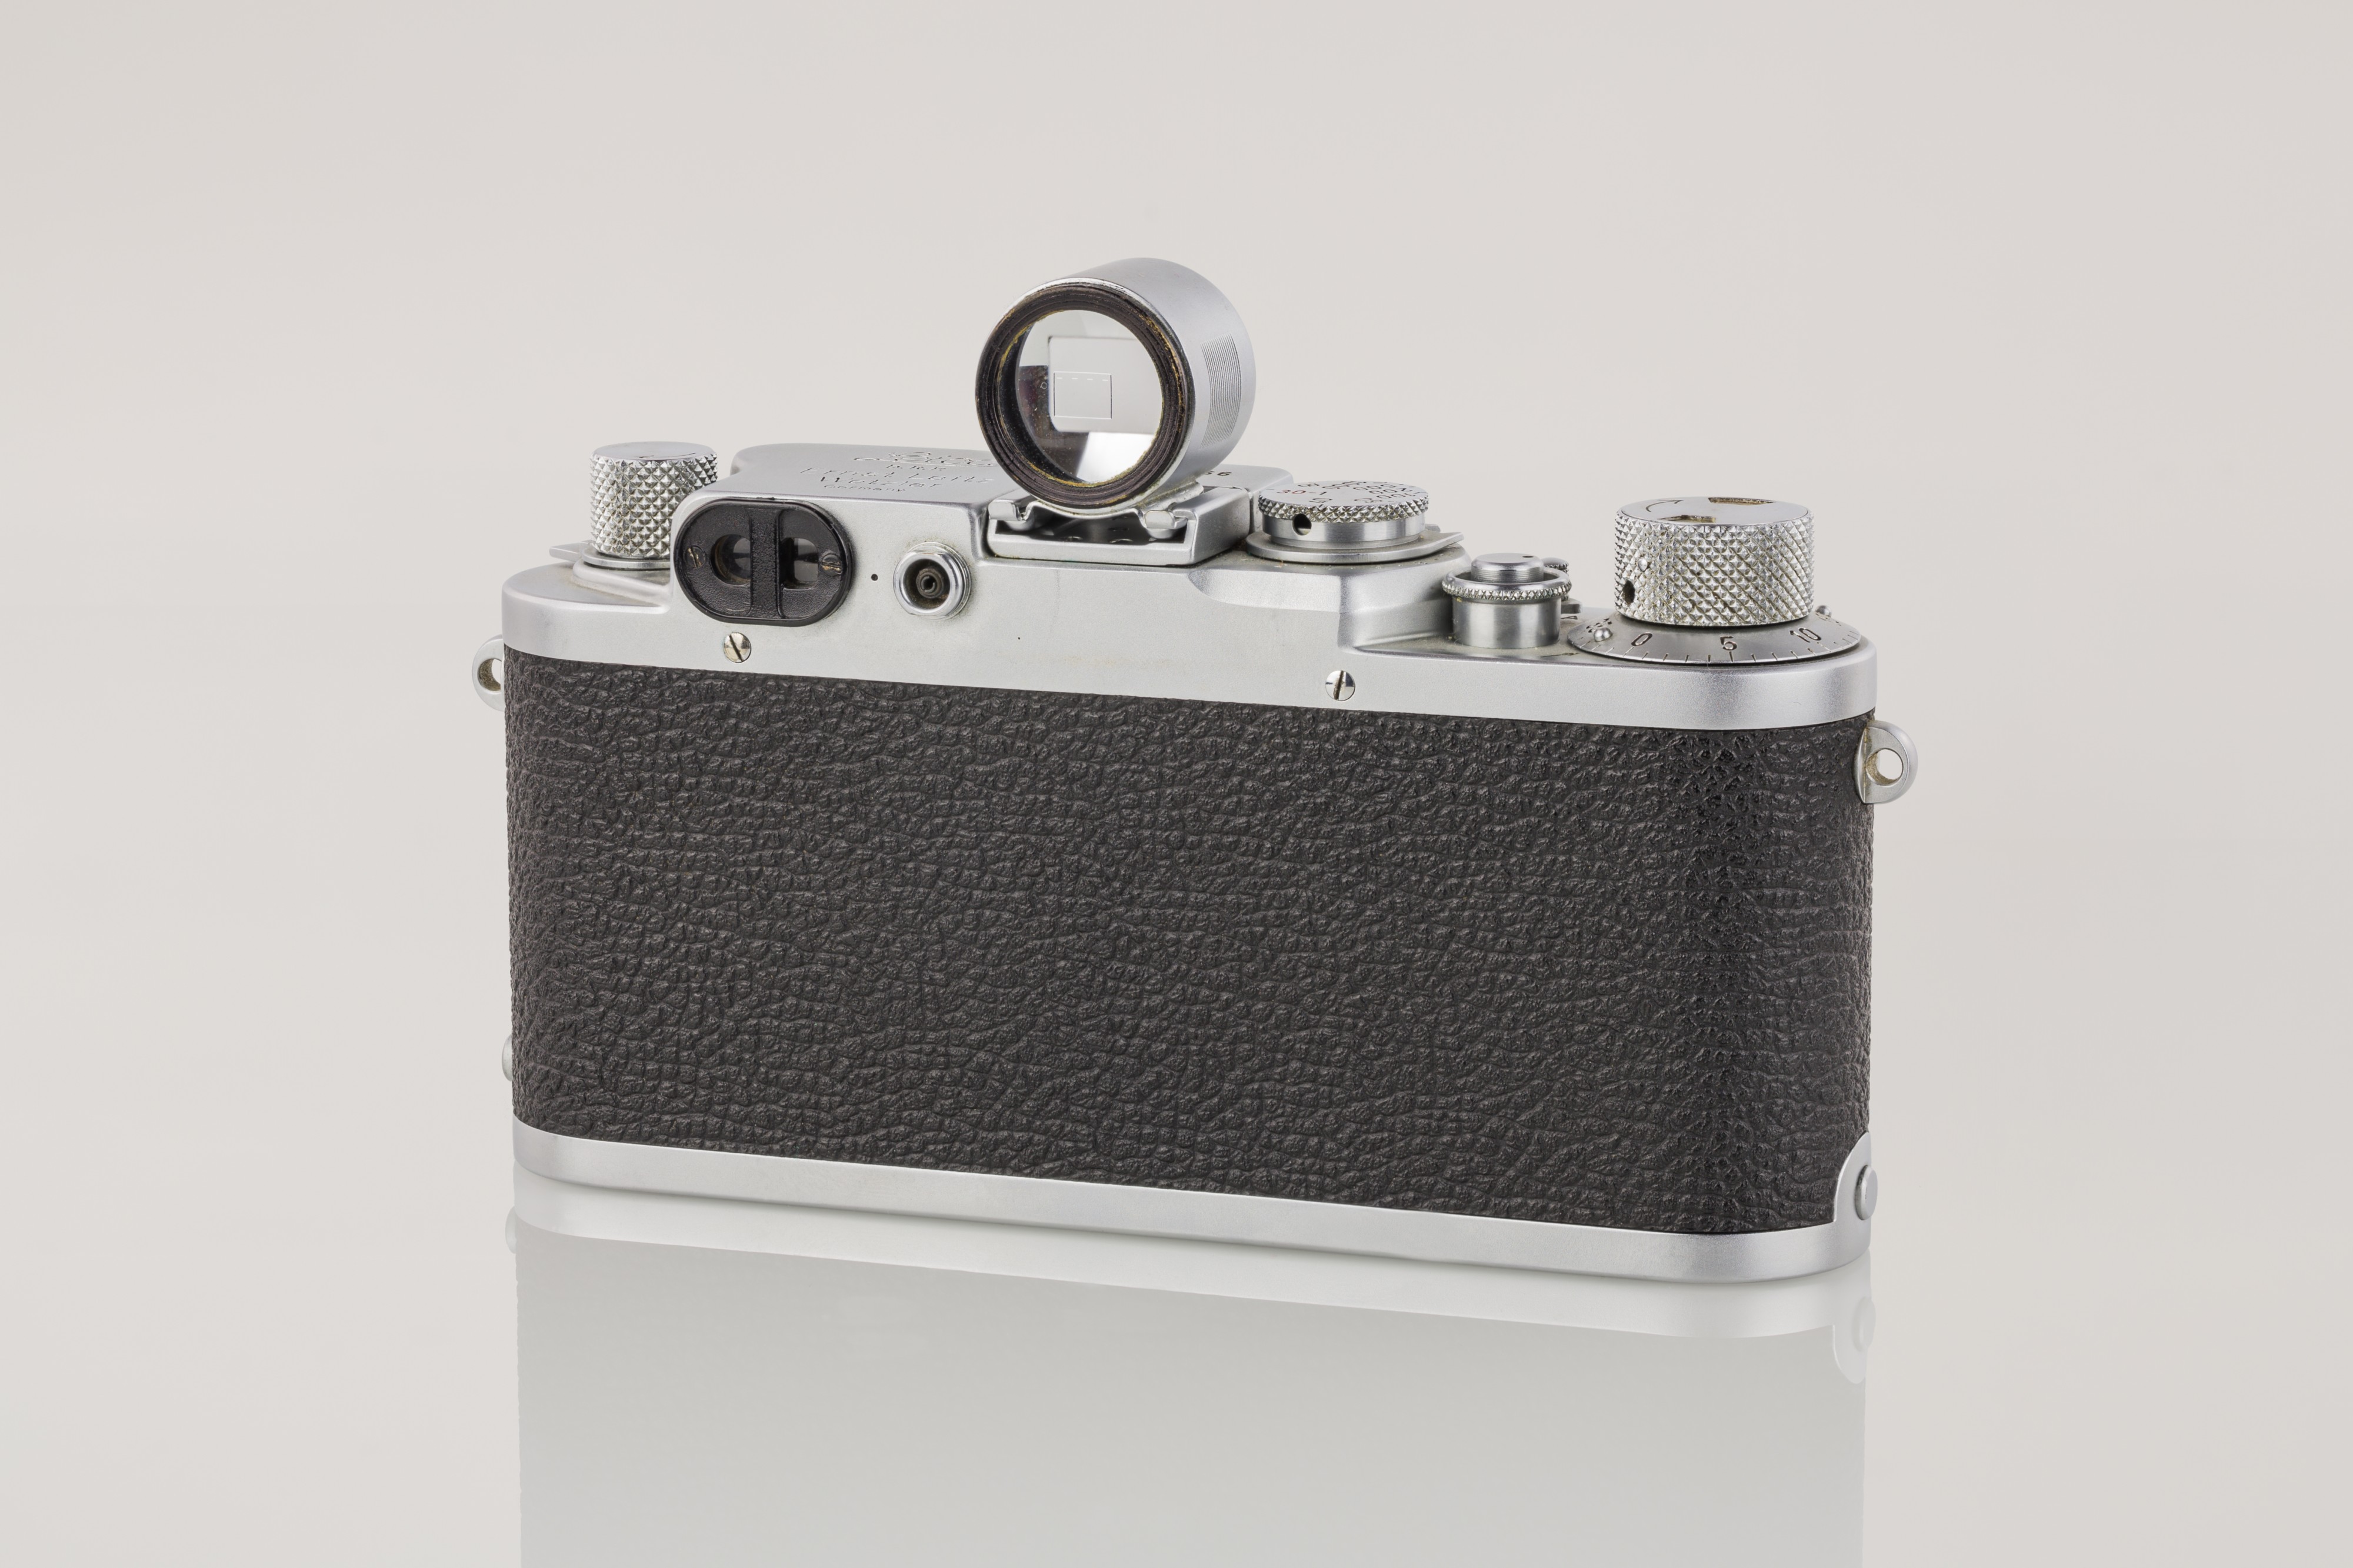 LEI0440 Leica IIIf chrom - Sn. 580566 1951-52-M39 Blitzsynchron back view Aufstecksucher-6562 hf-